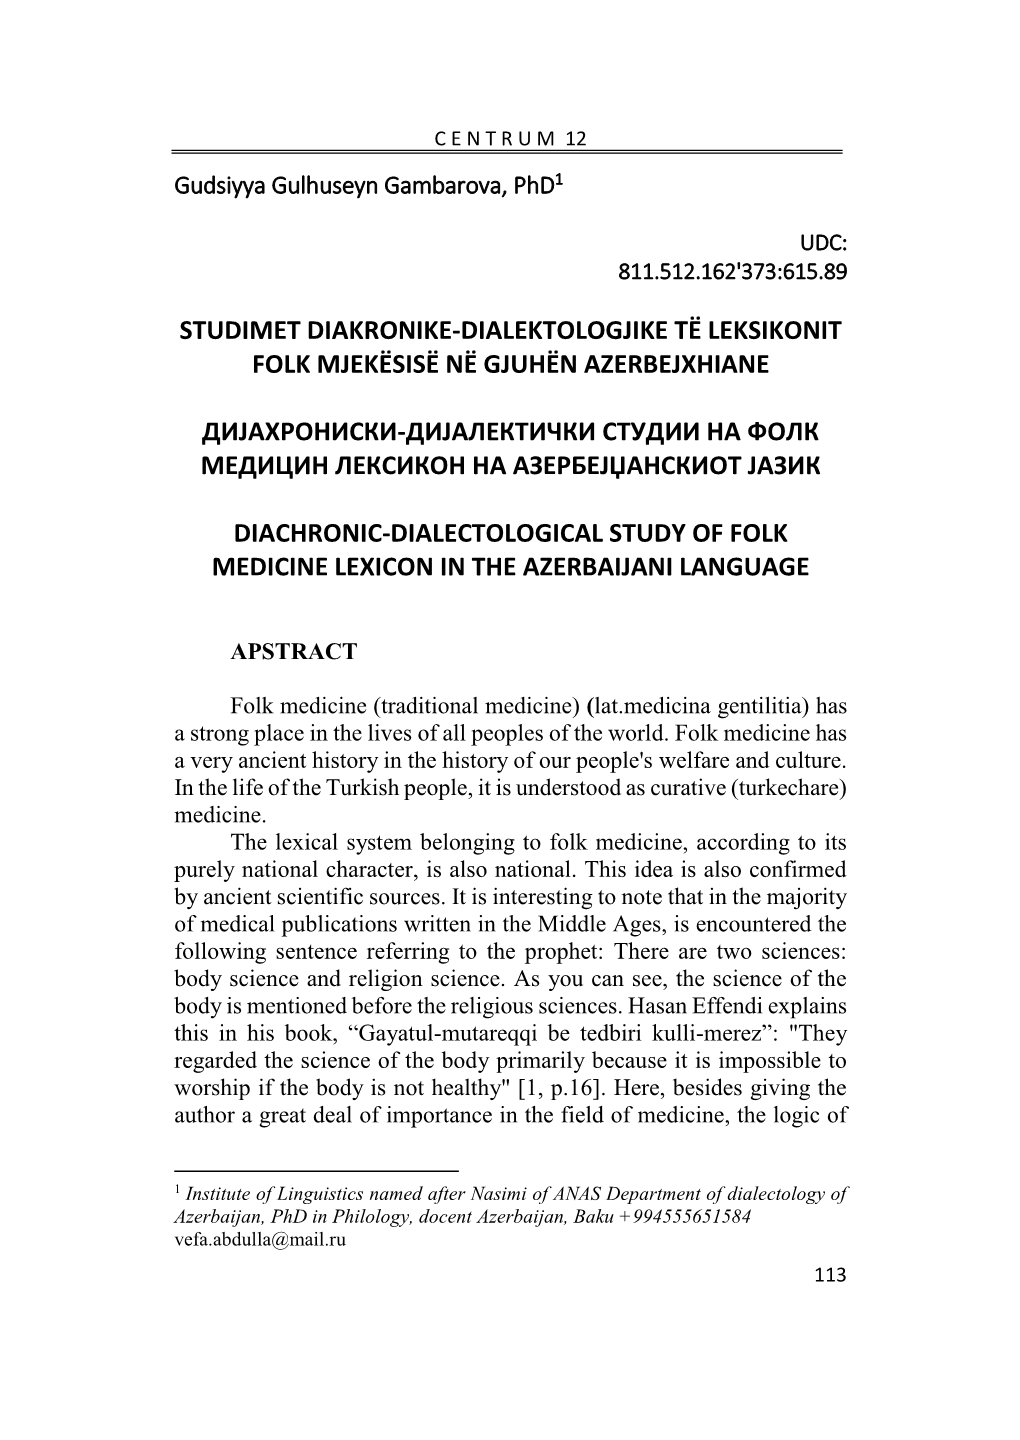 Diachronic-Dialectological Study of Folk Medicine Lexicon in the Azerbaijani Language